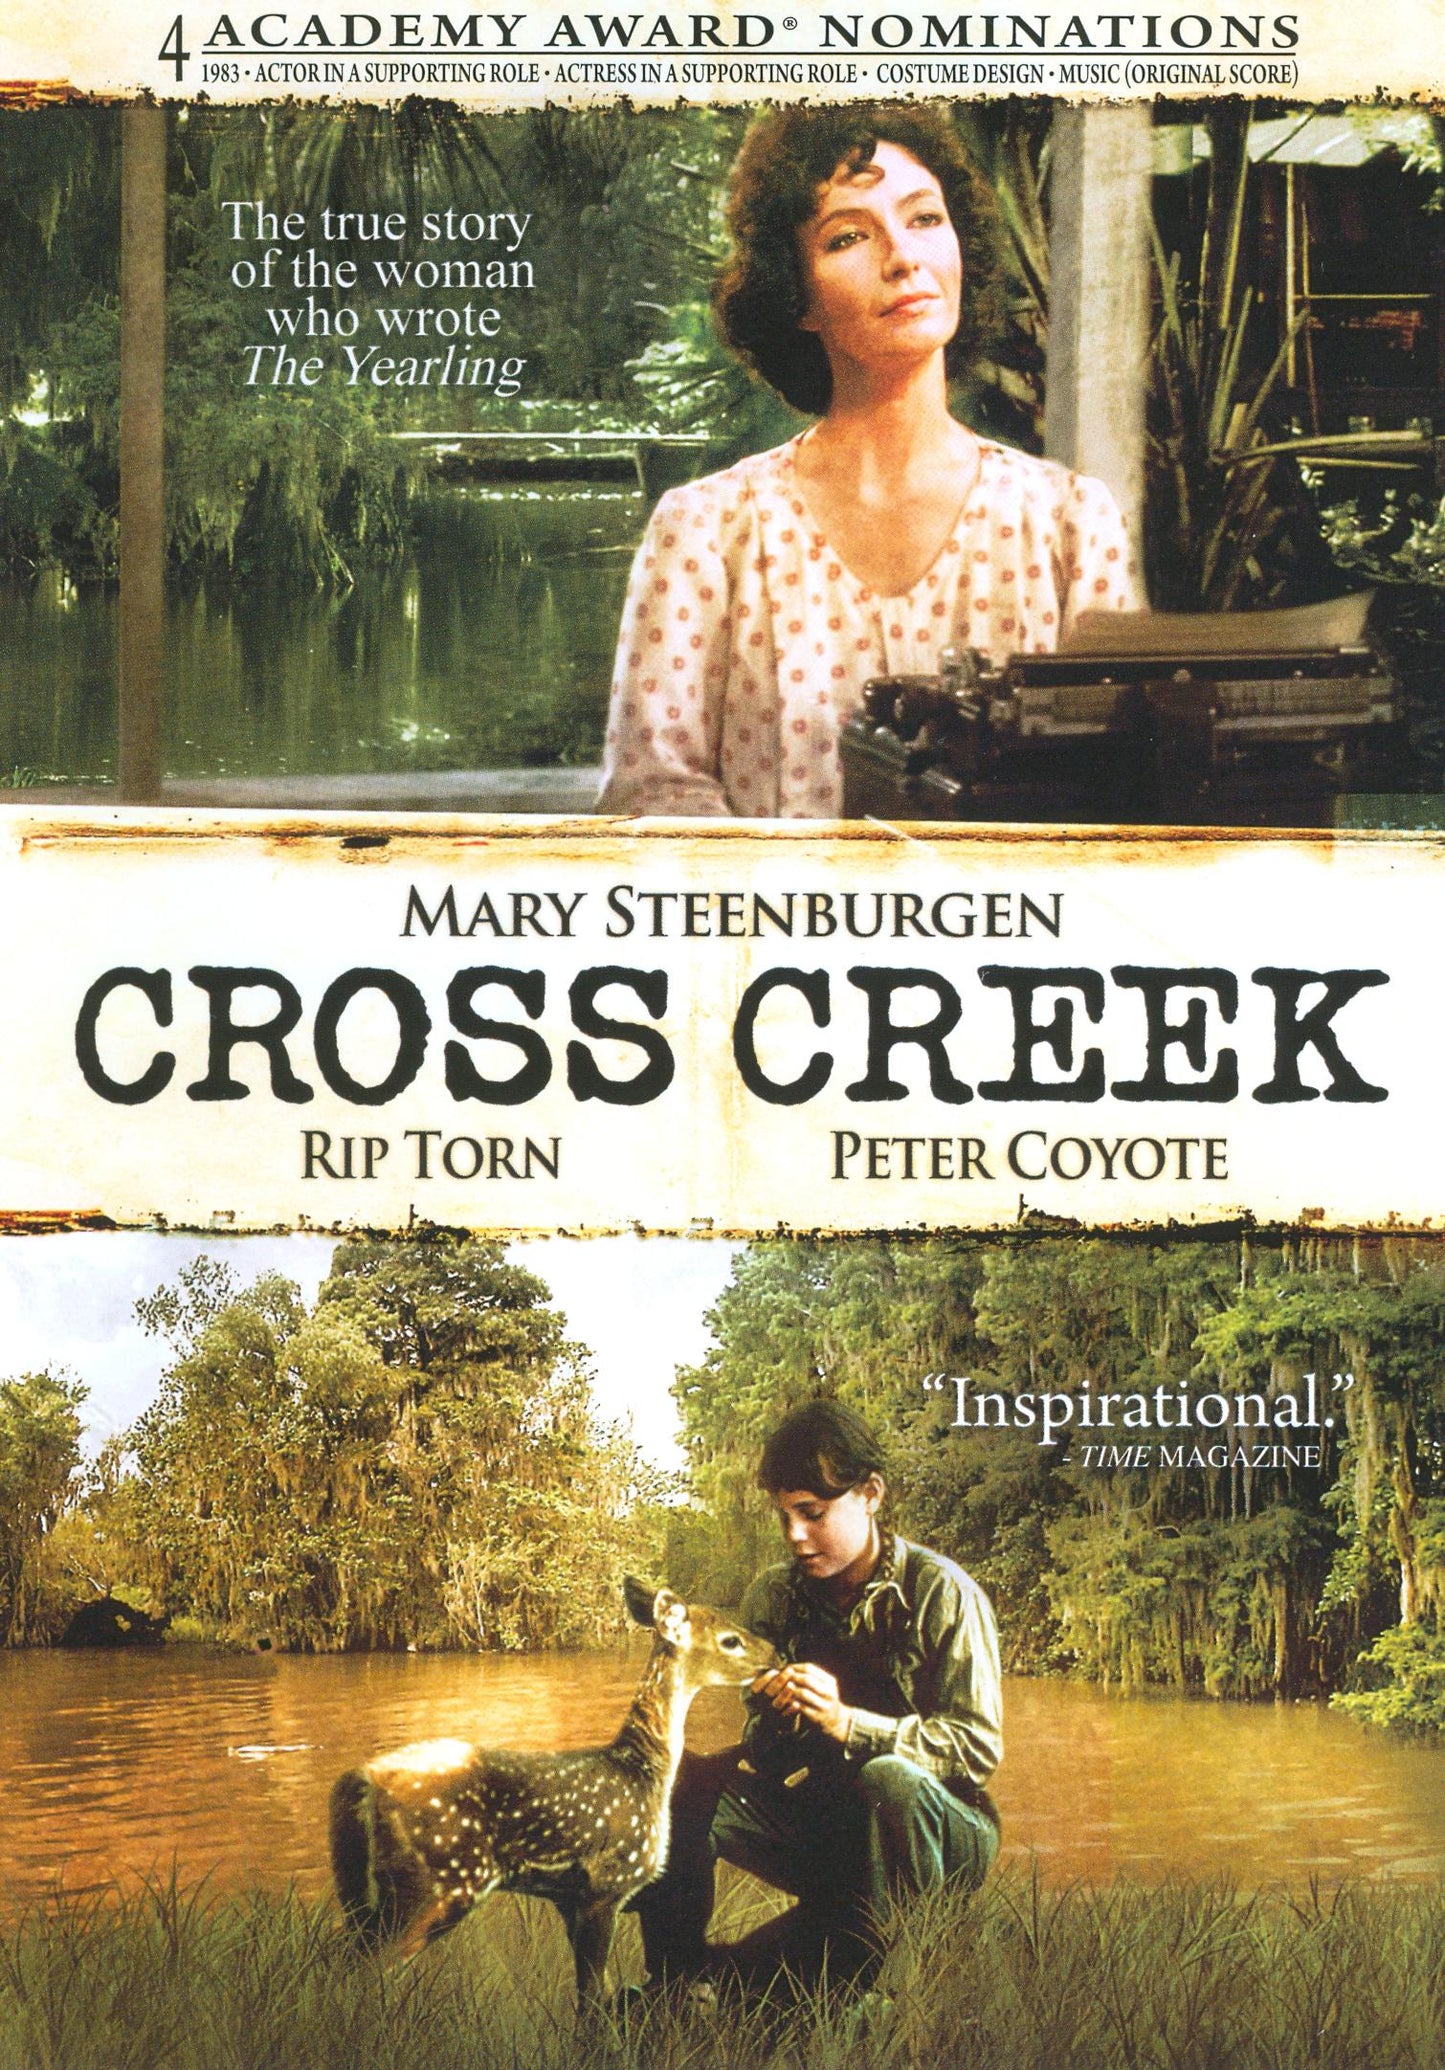 Cross Creek cover art